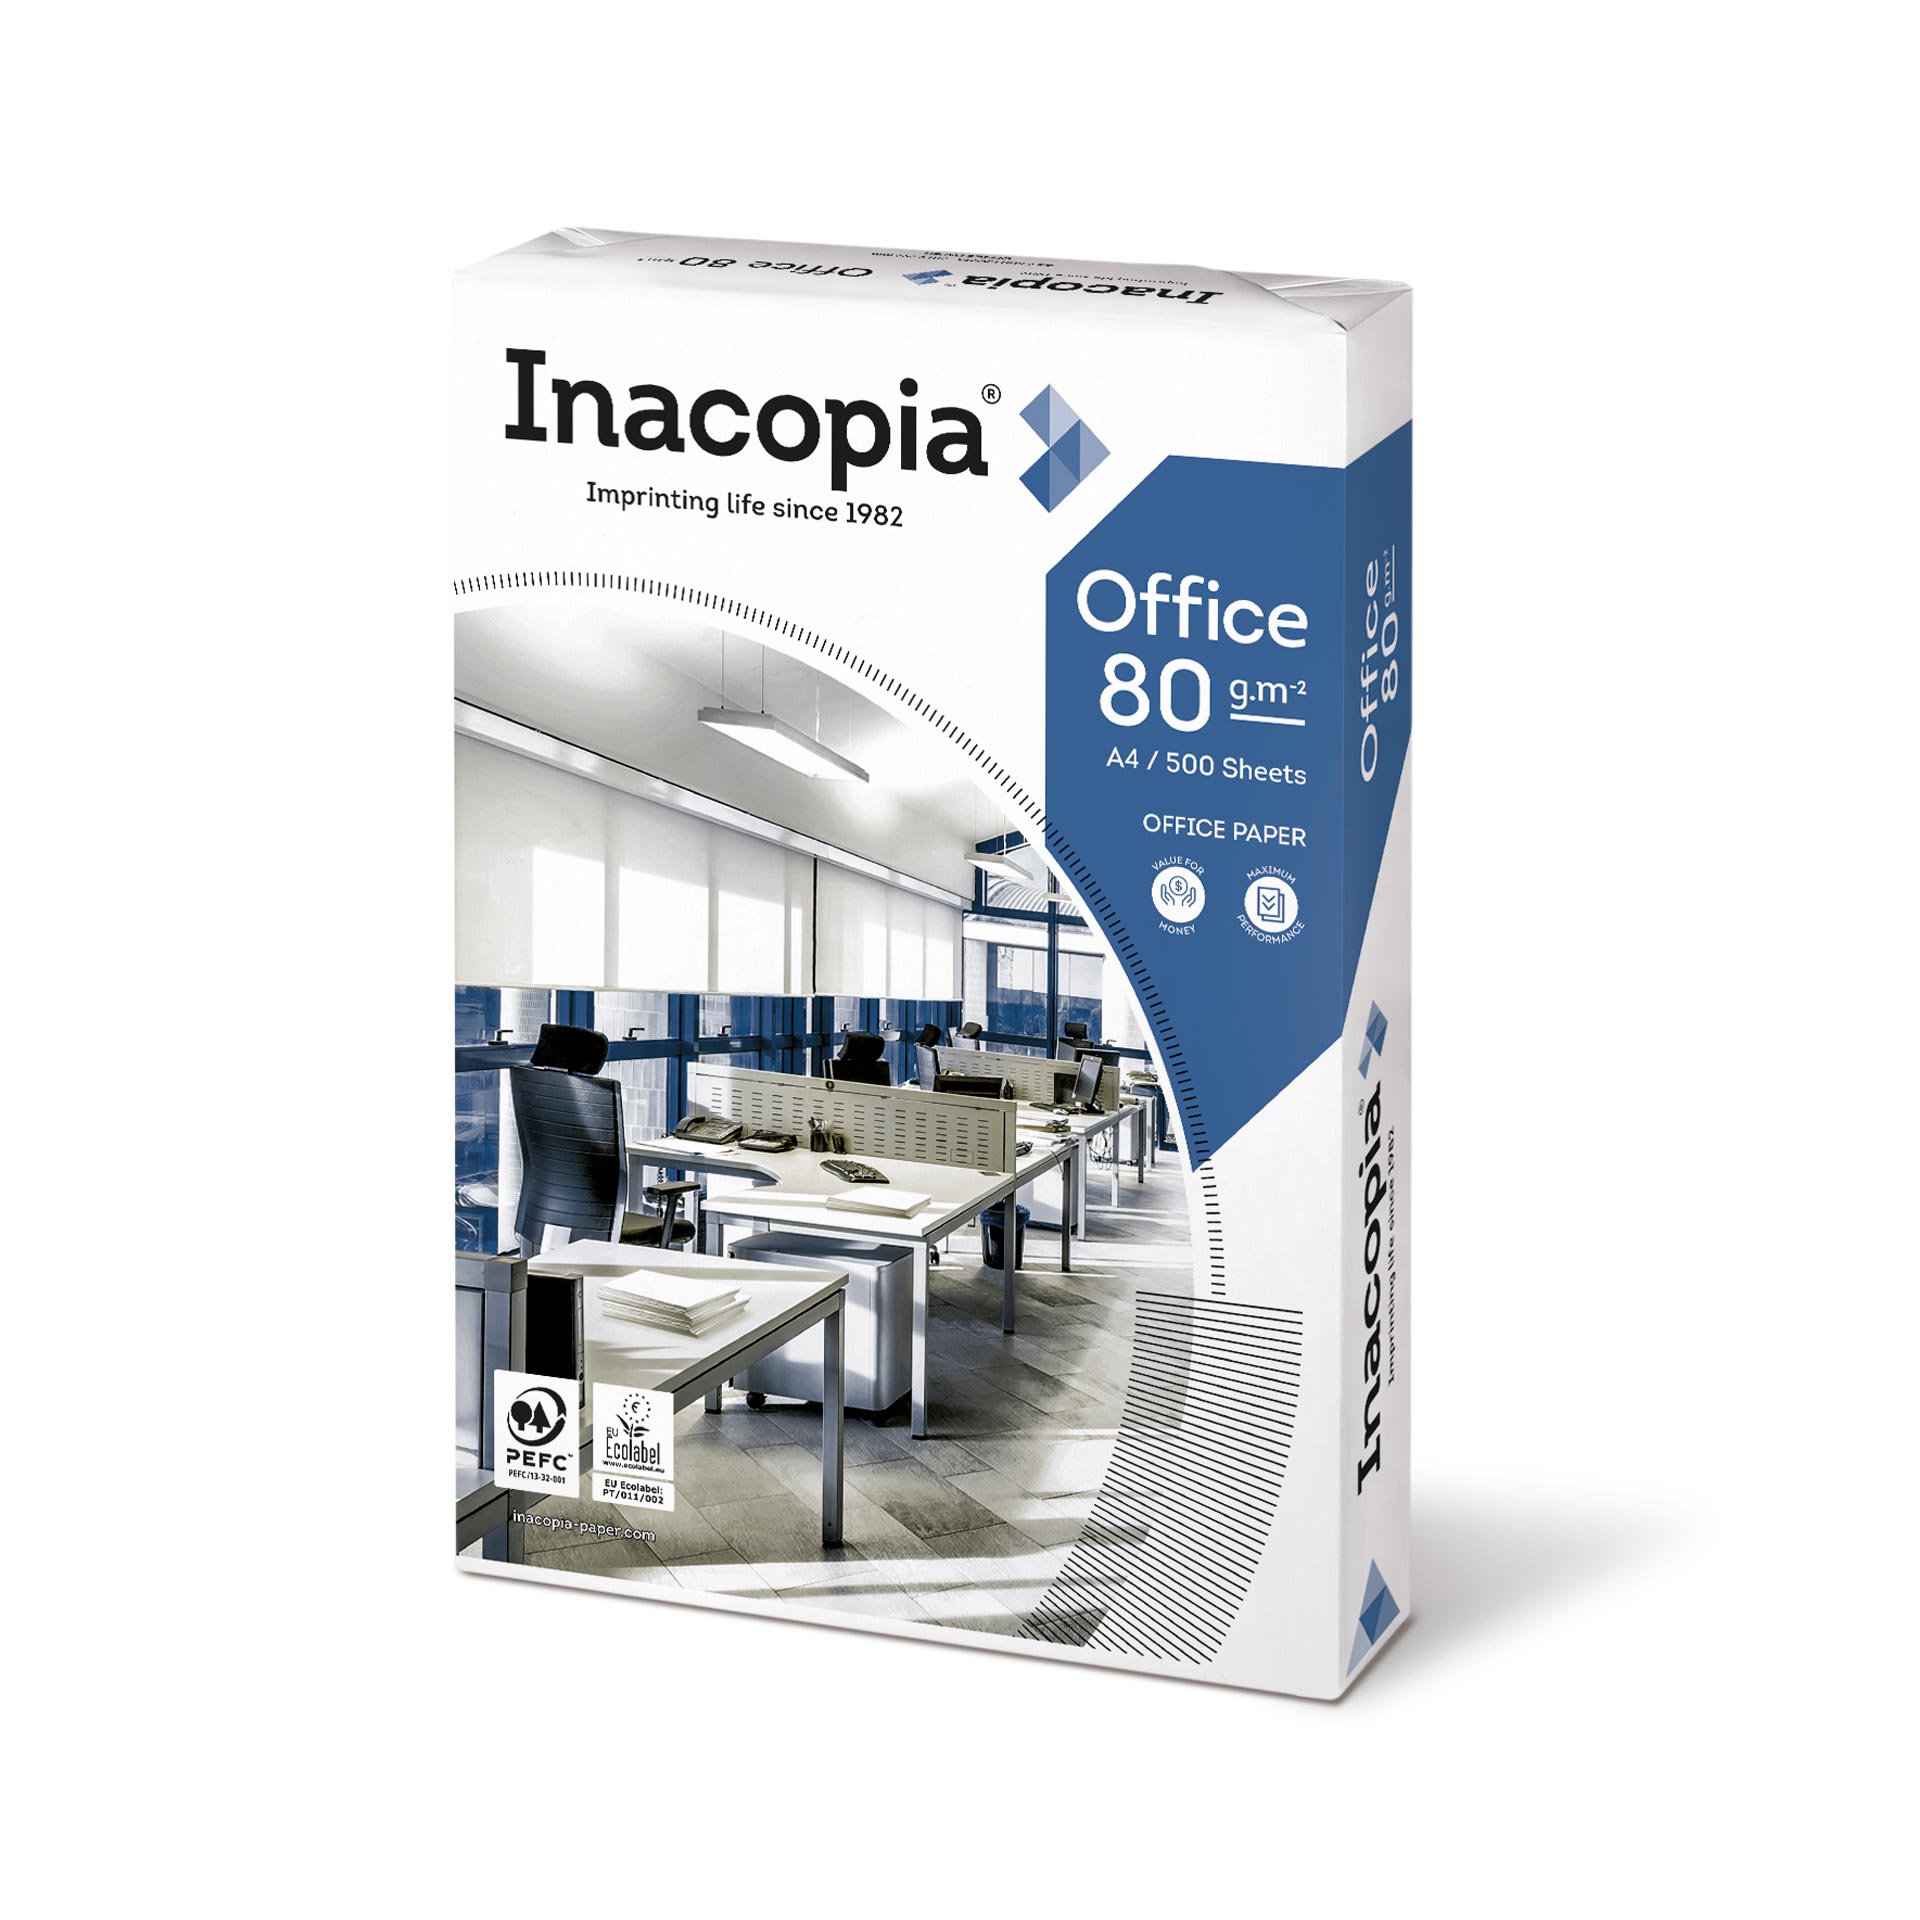 Kopierpapier / Druckpapier / Papier für Kopie & Druck - Inacopia Office (DIN A4, Palette, 100.000 Blatt)